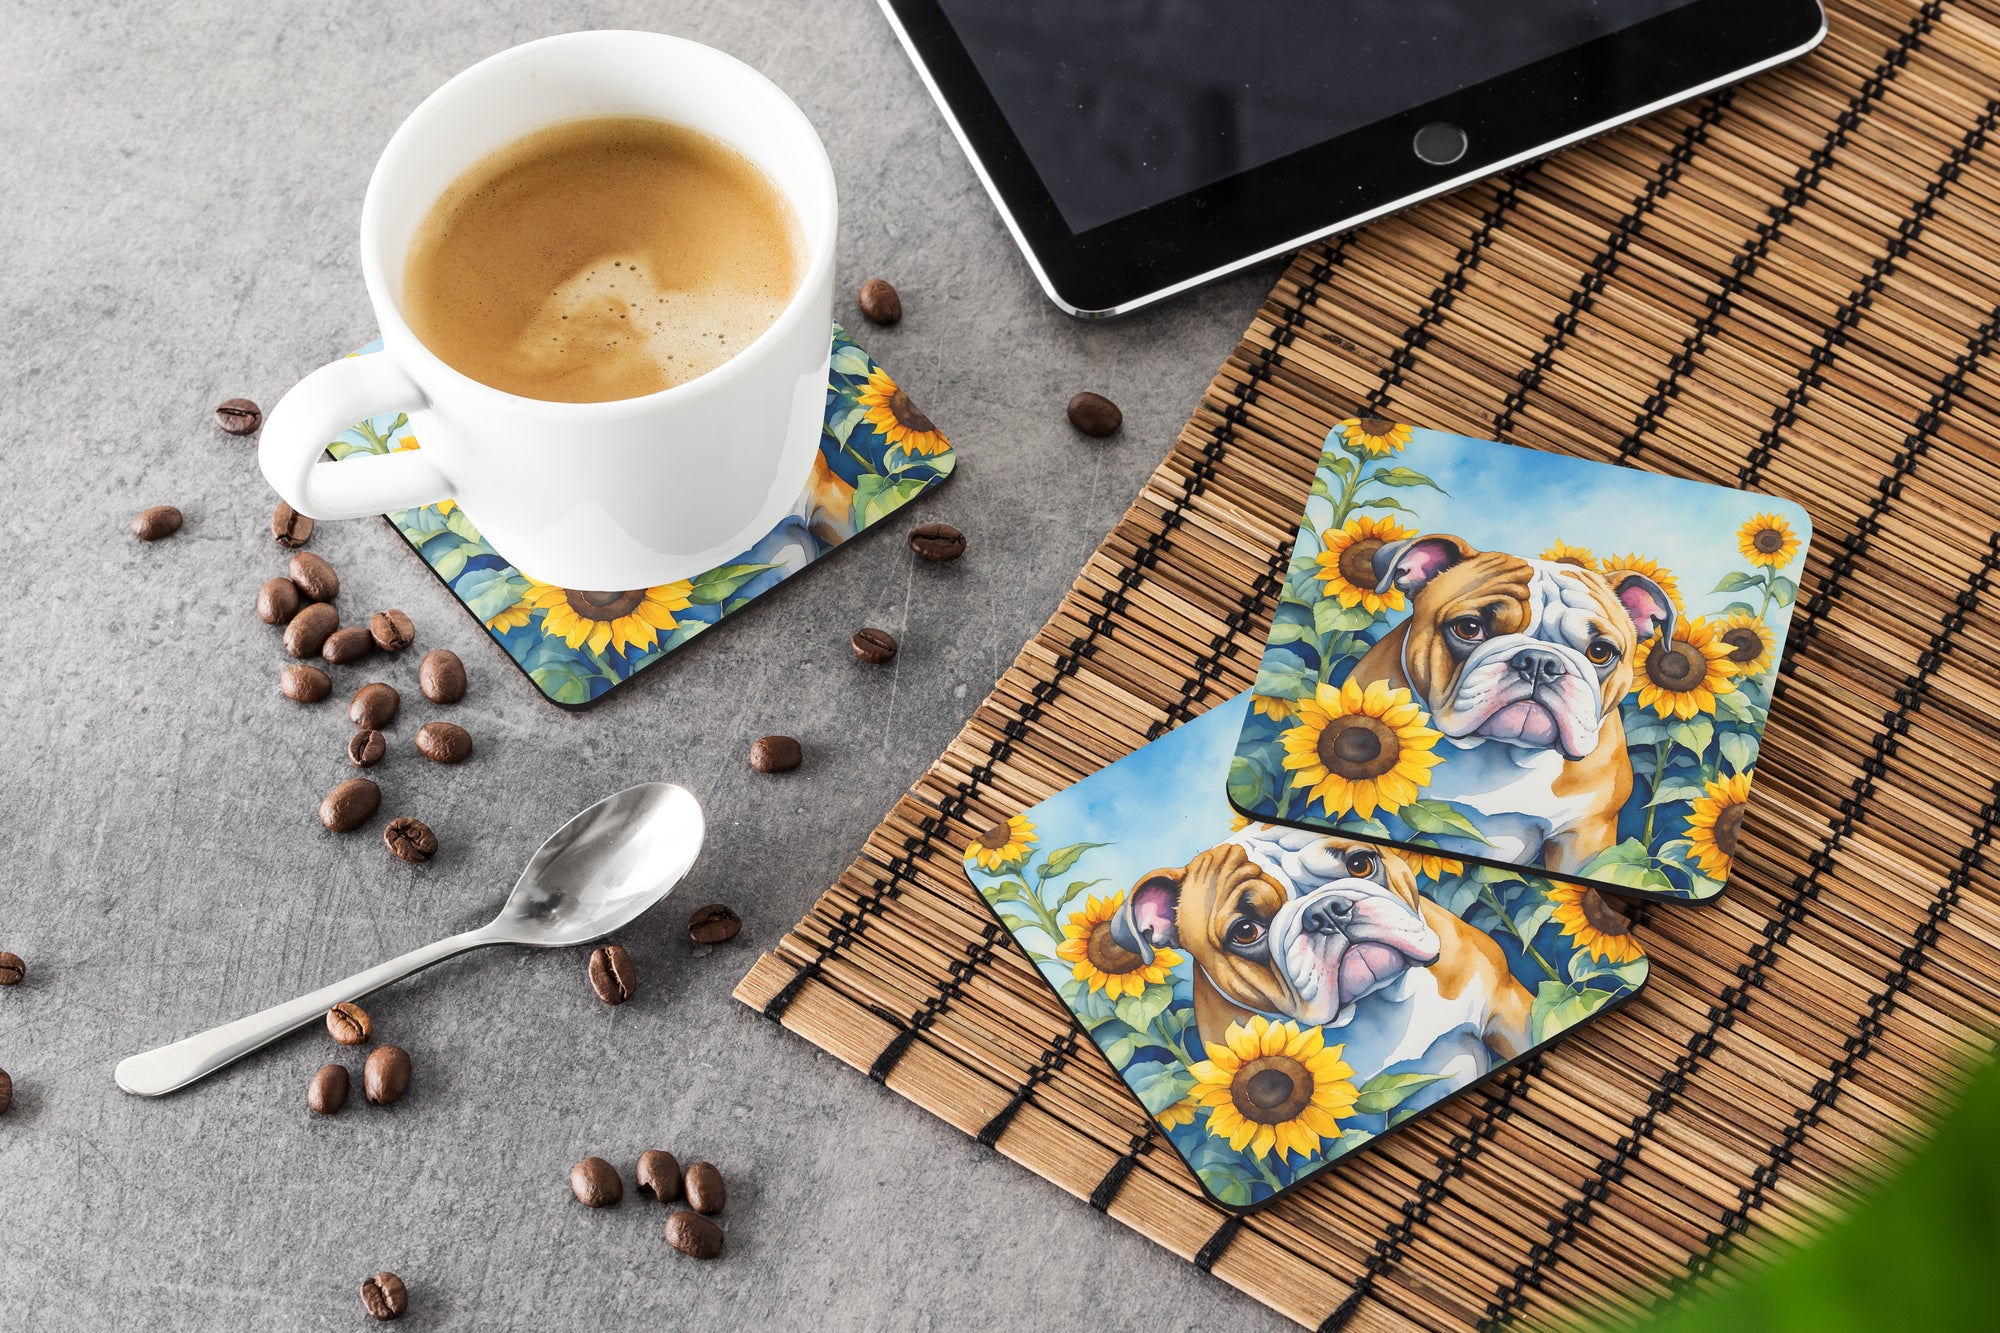 English Bulldog in Sunflowers Foam Coasters